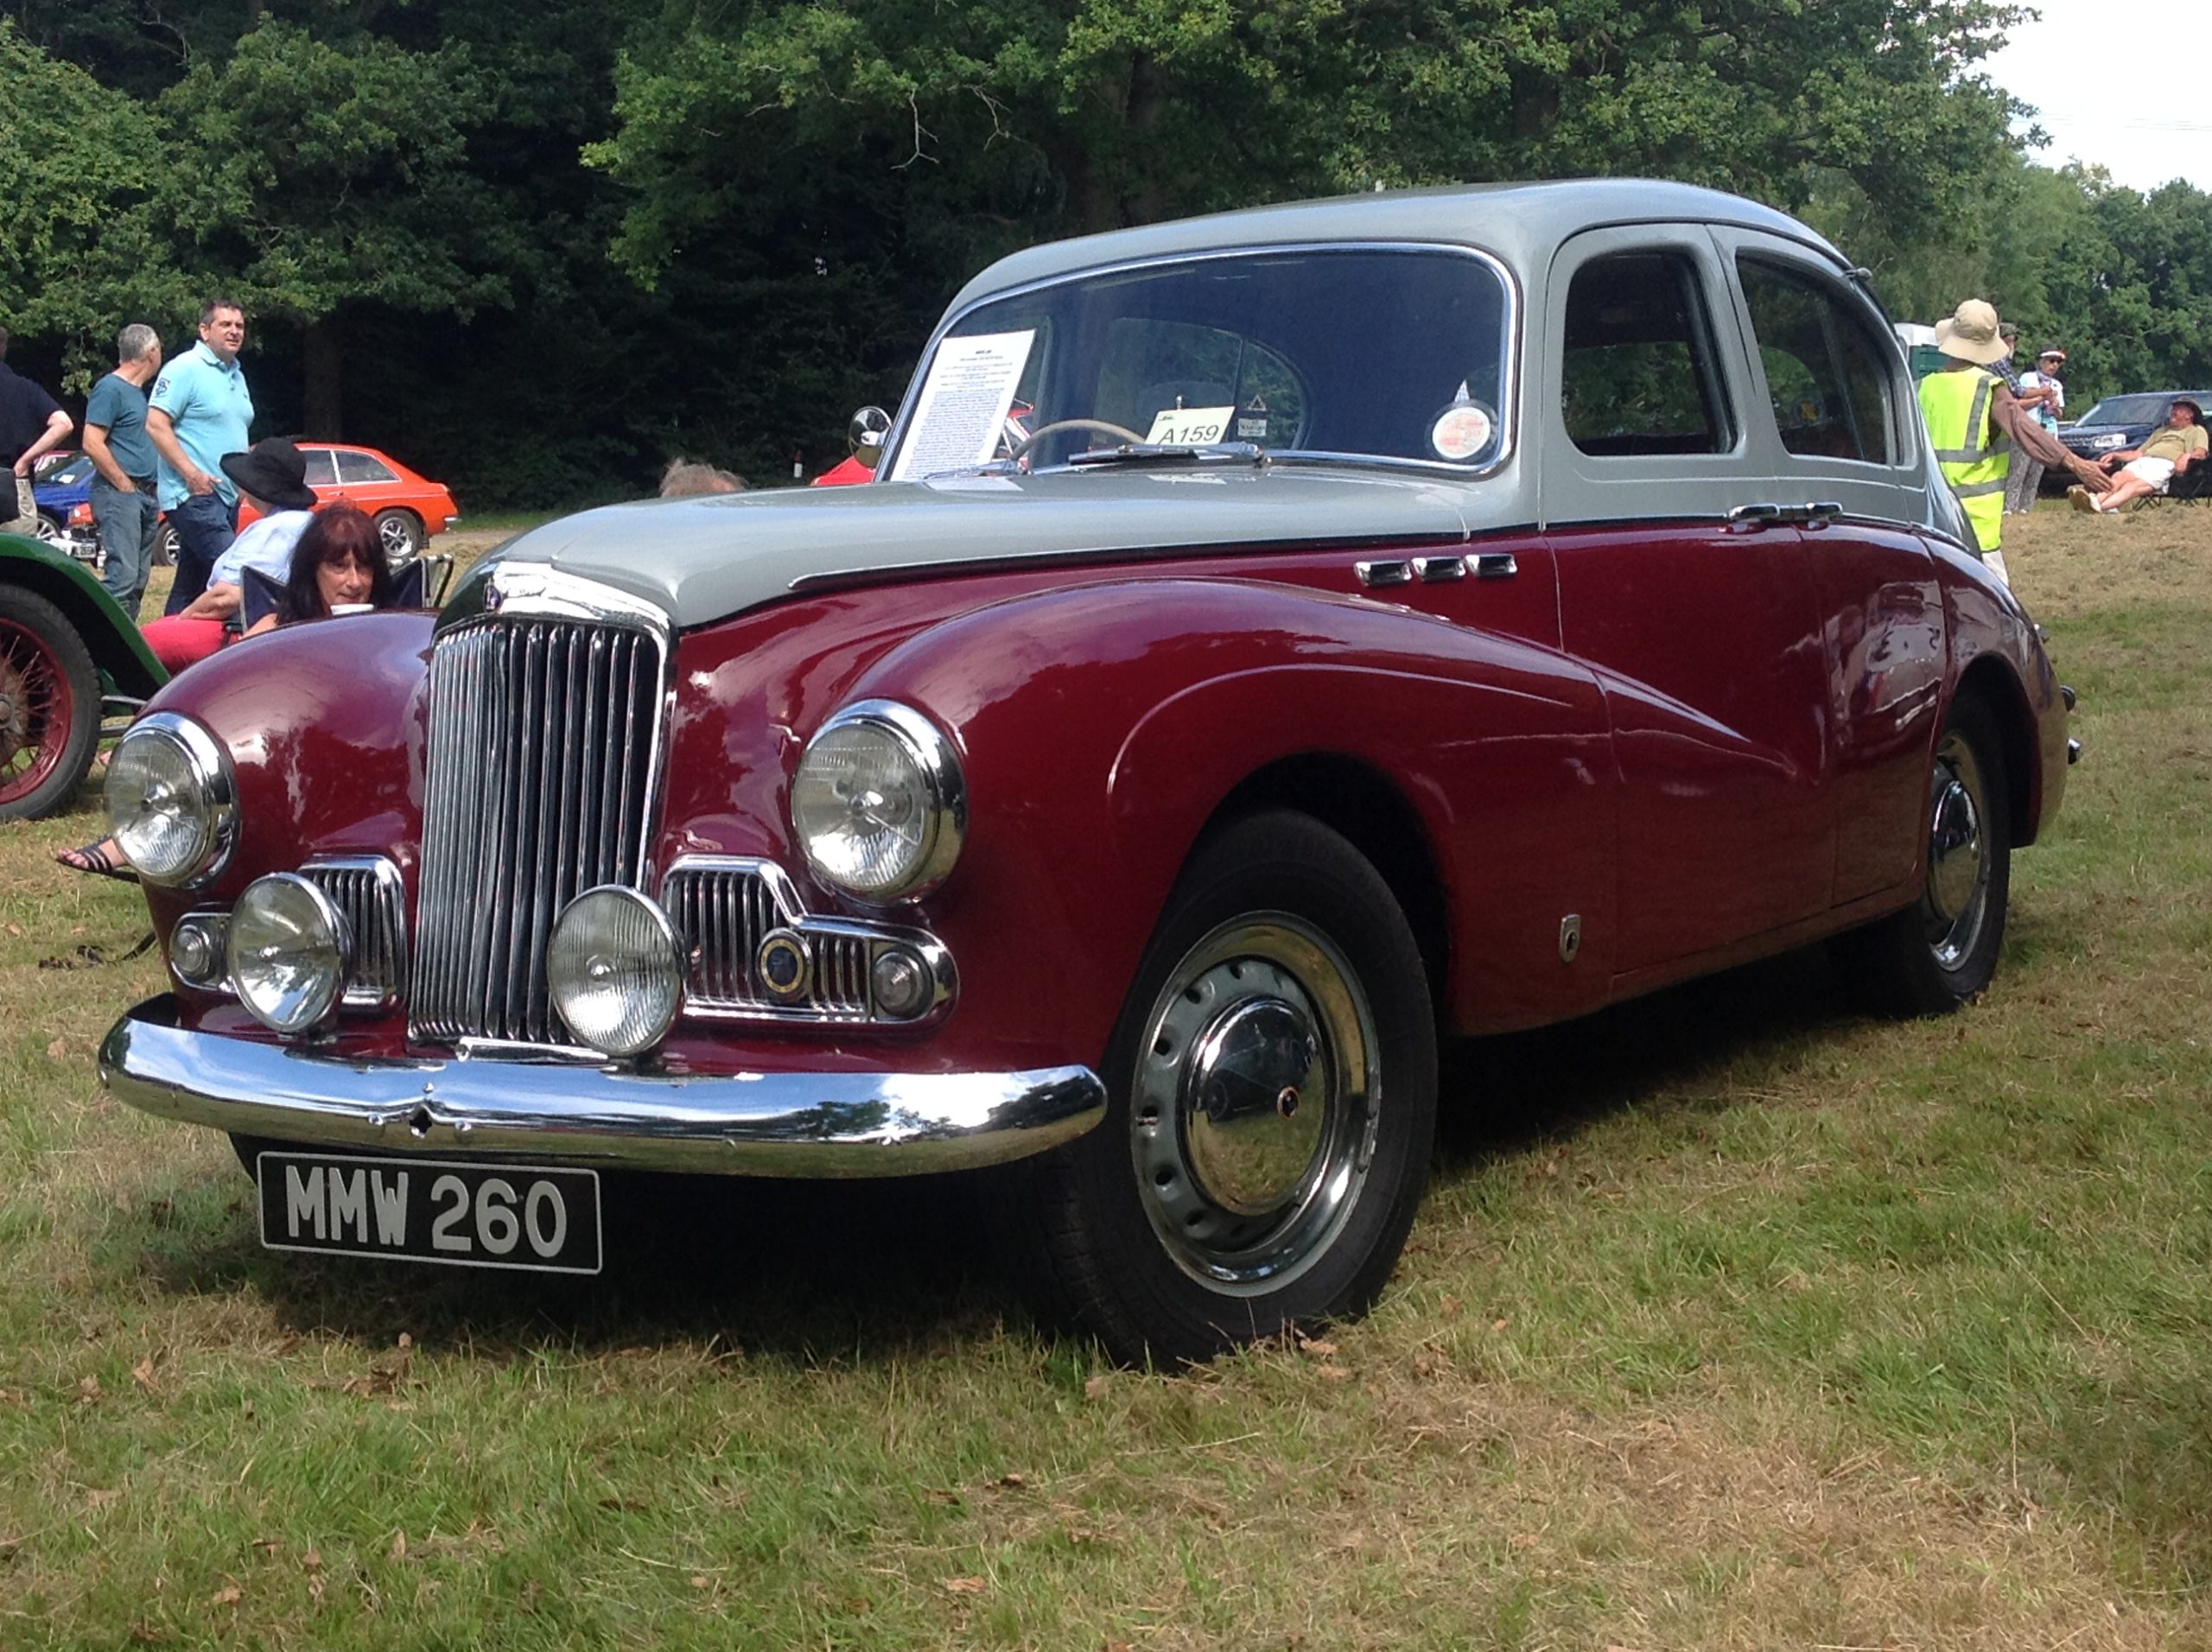 1940s, classic cars, Sunbeam-Talbot